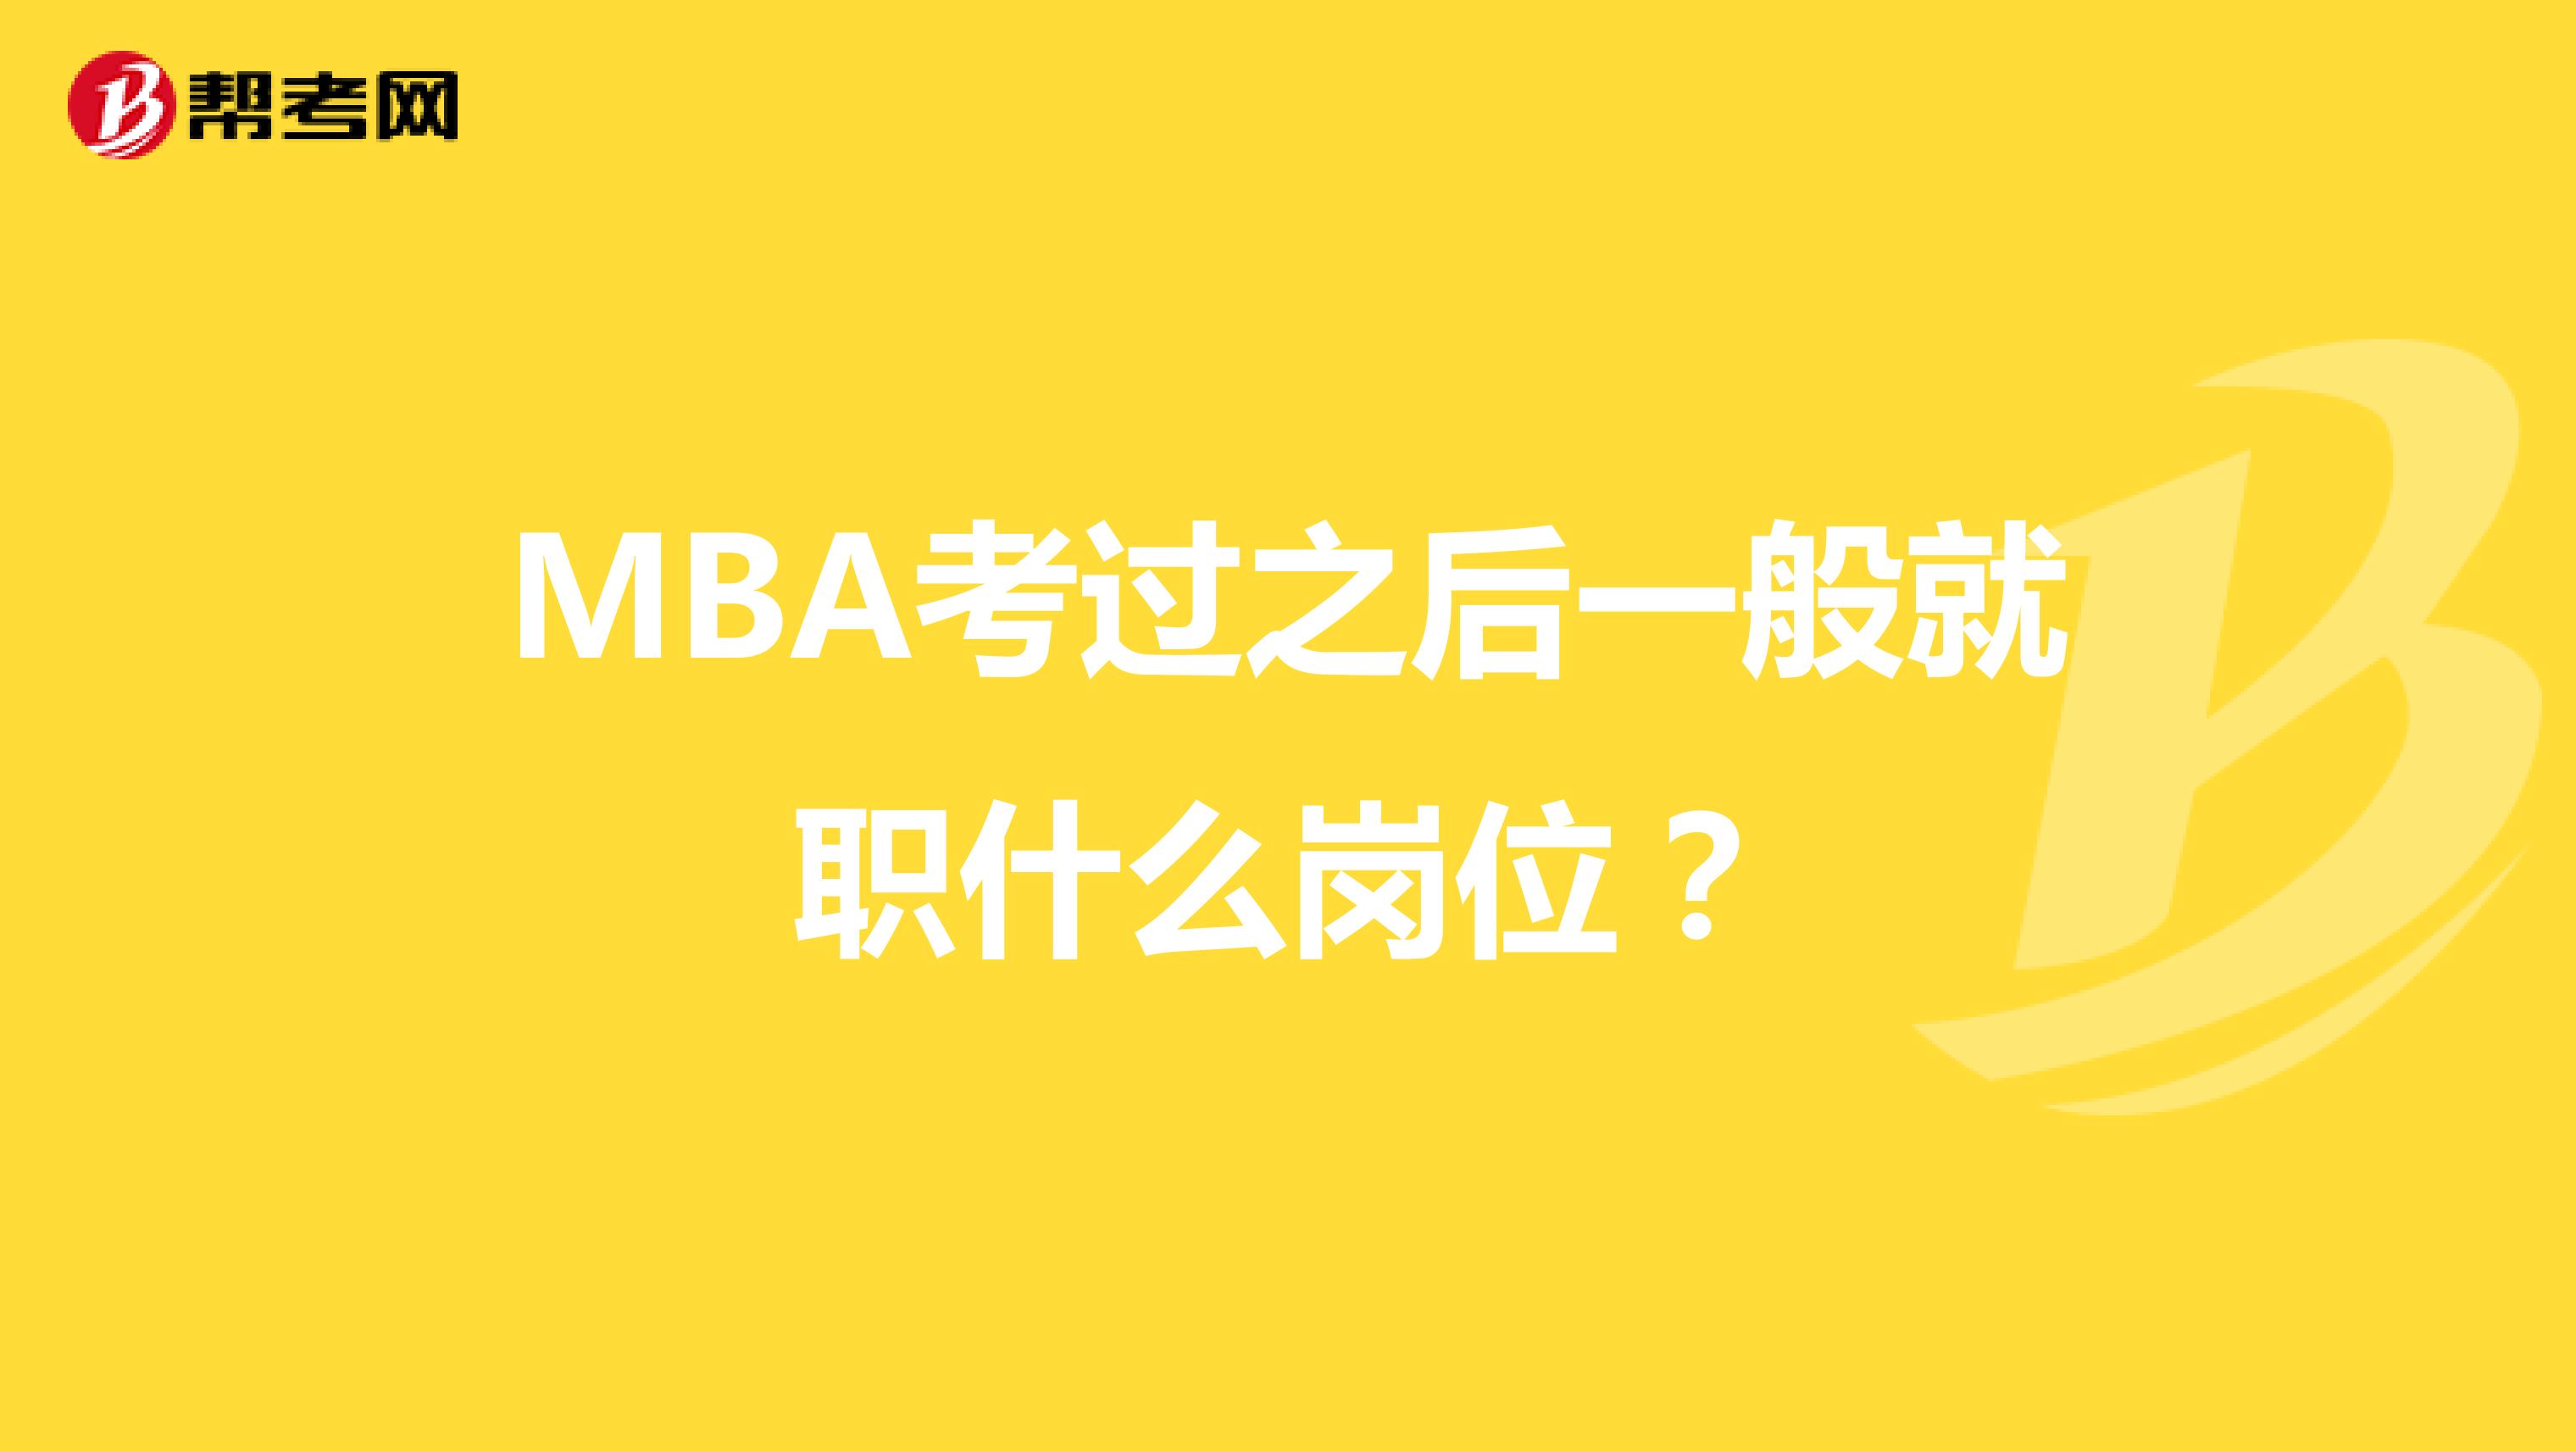 MBA考过之后一般就职什么岗位？